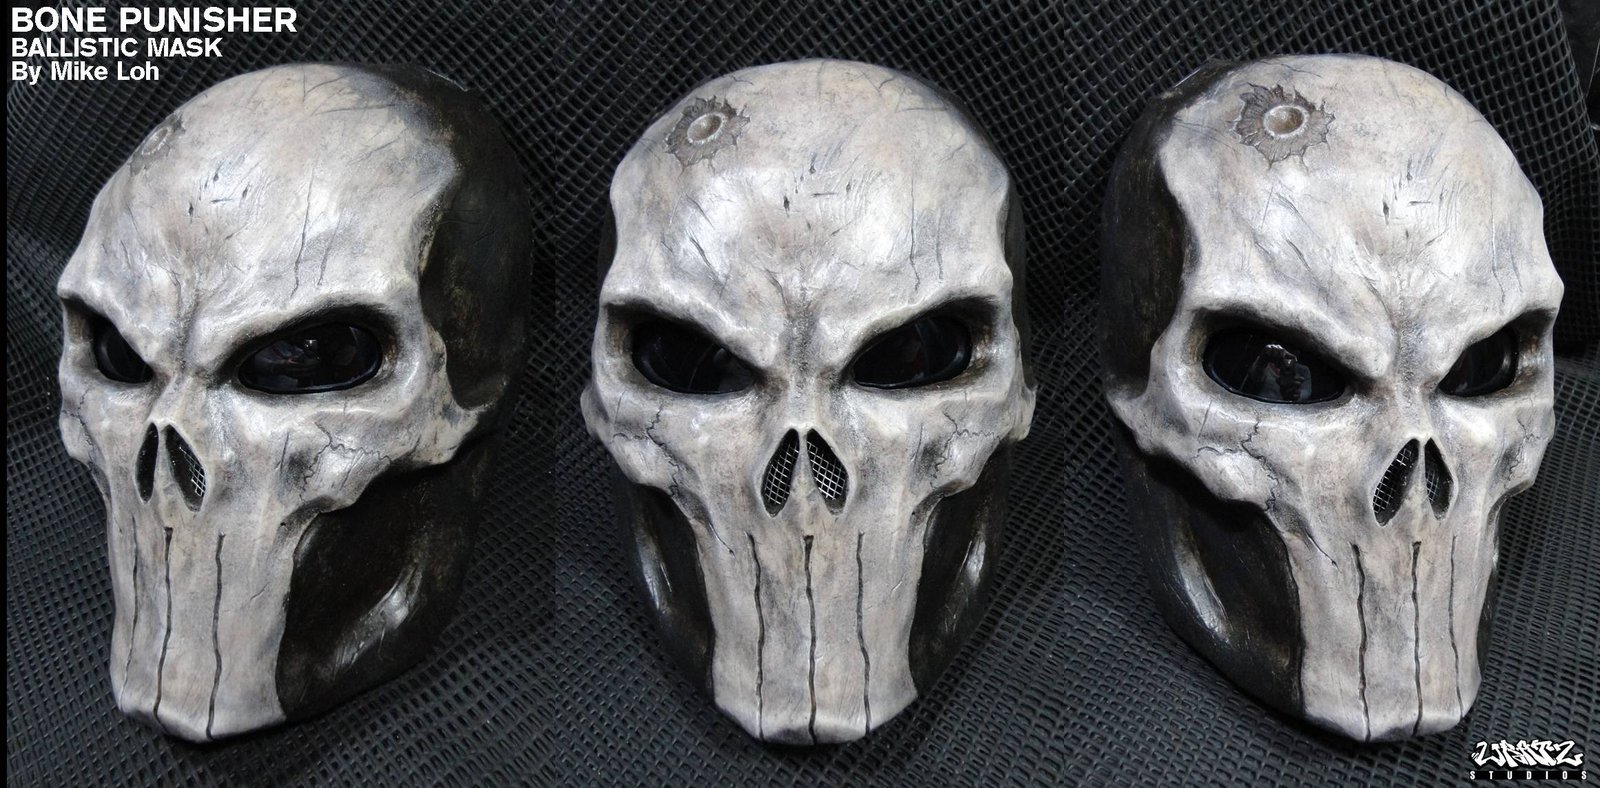 Realporngirlz Skull And Bones iPhone Wallpaper Background Html